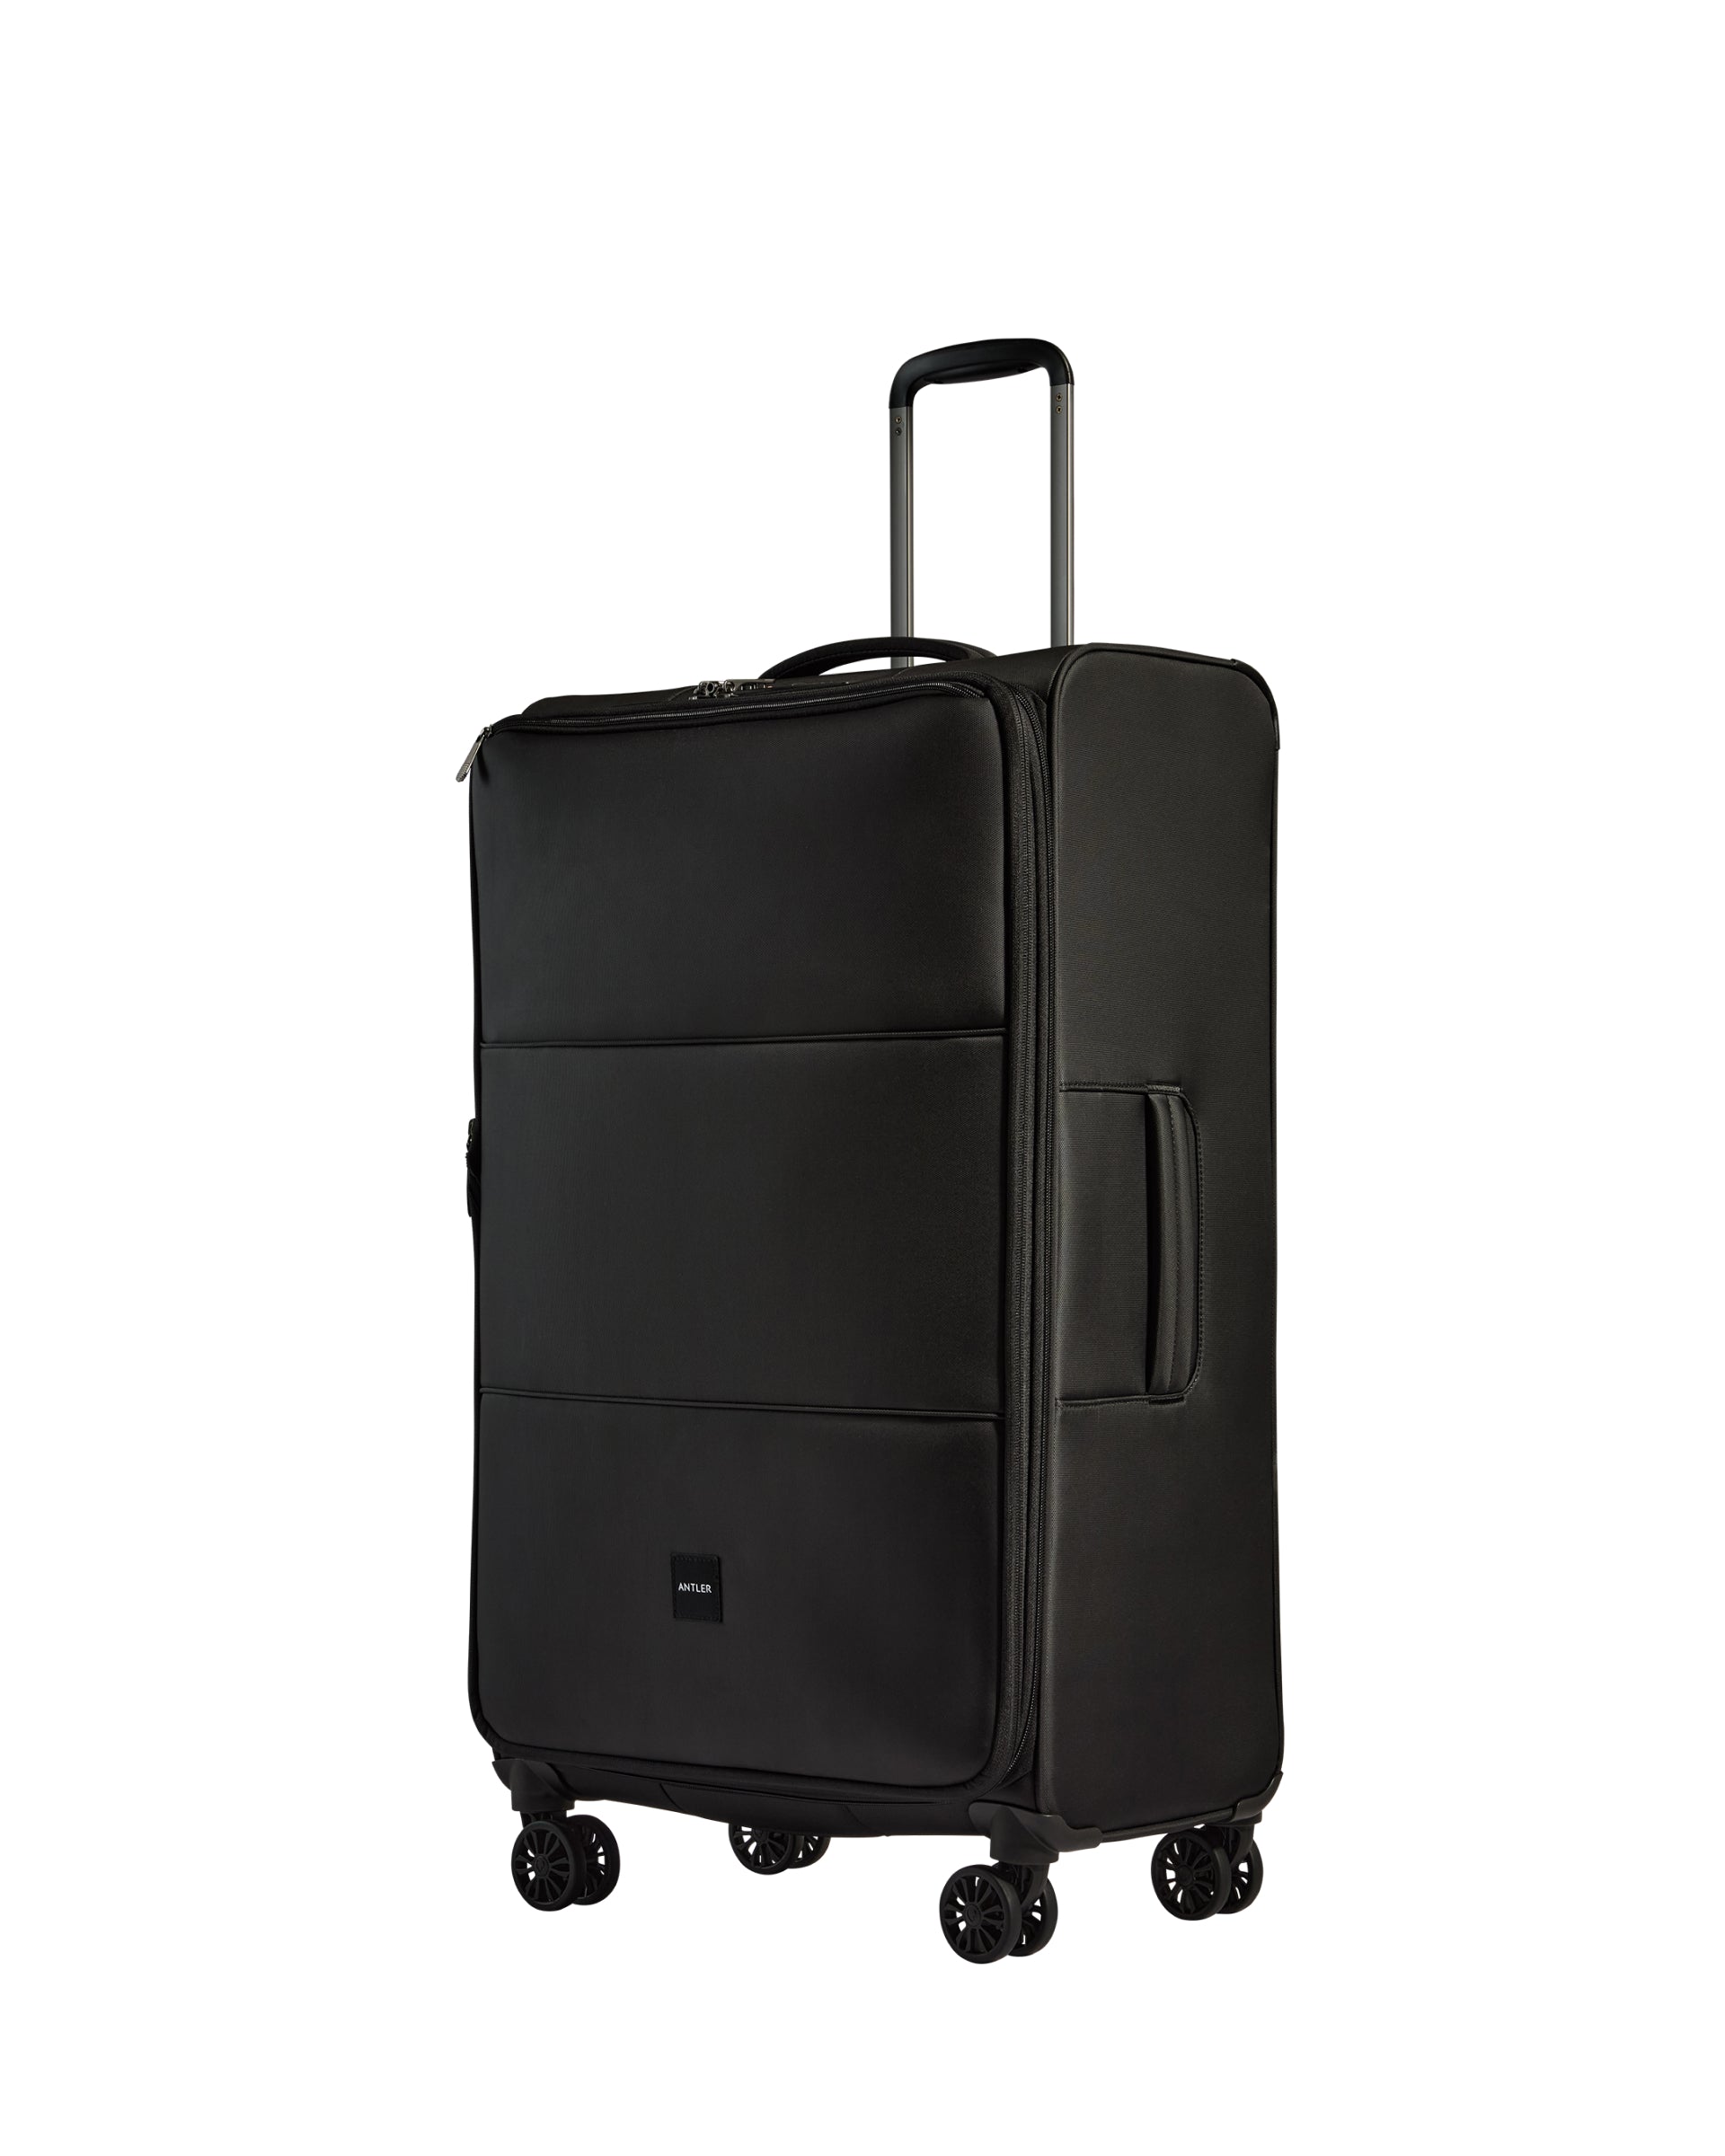 View Antler Soft Stripe Large Suitcase In Black Size 31cm x 83cm x 465cm information